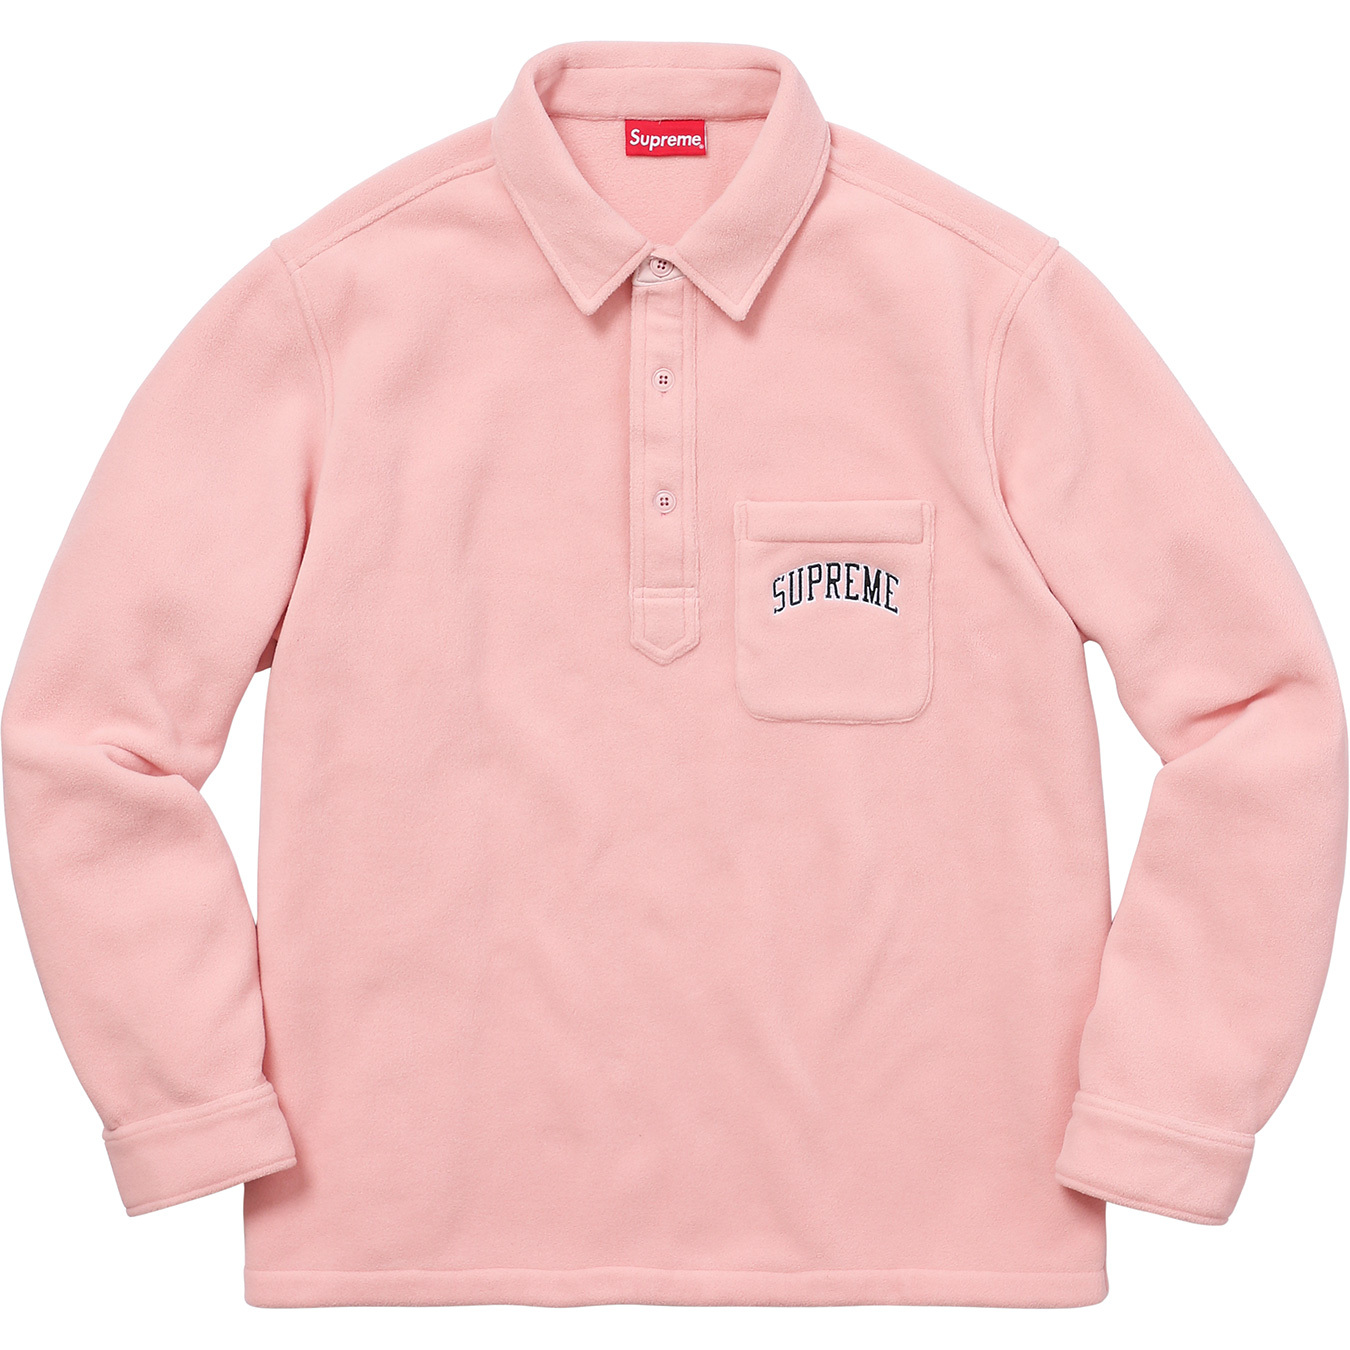 Supreme Polartec Pullover Shirt Pink メンズ - FW17 - JP